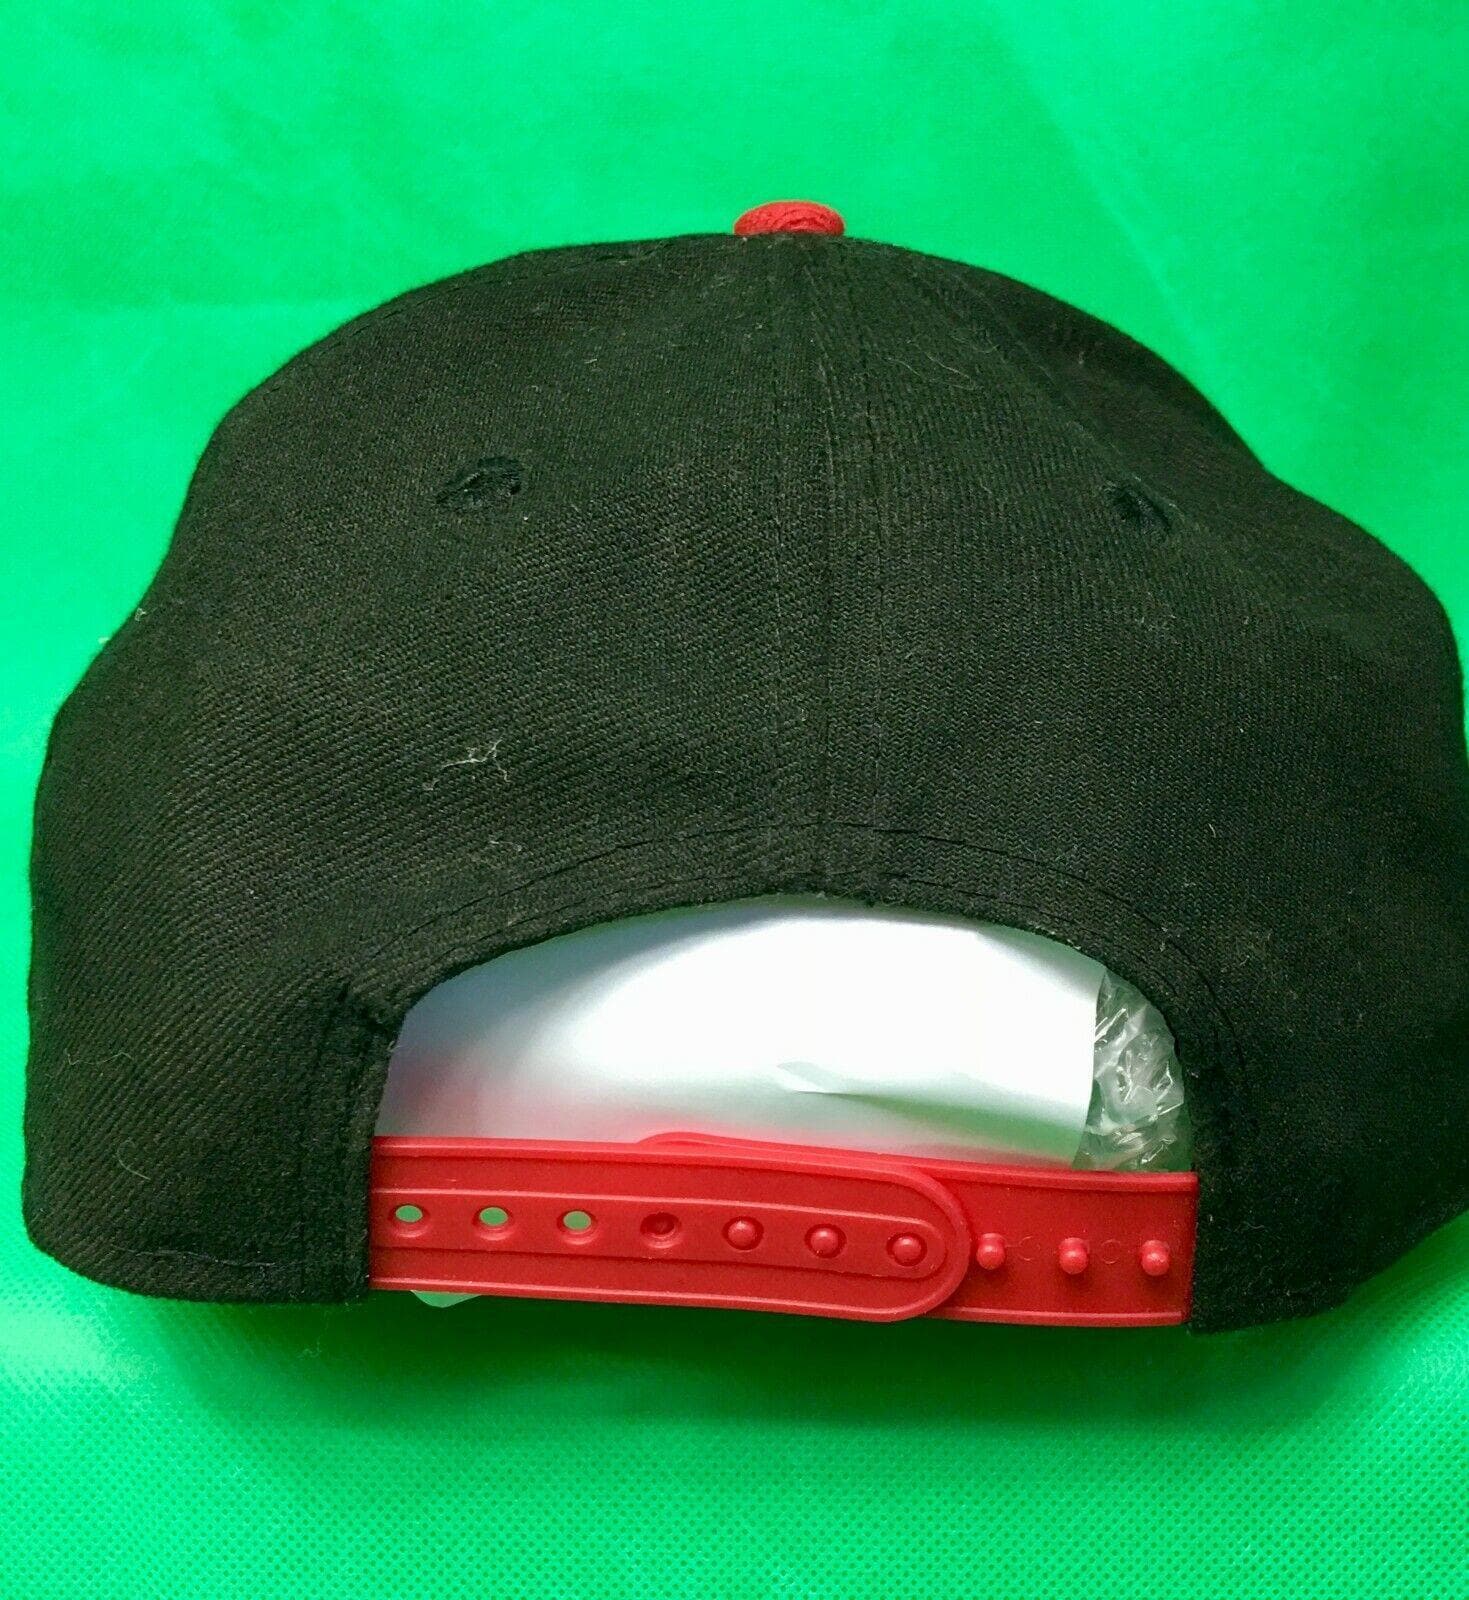 NBA Chicago Bulls New Era 9FIFTY Baseball Hat/Cap Adjustable NWOT